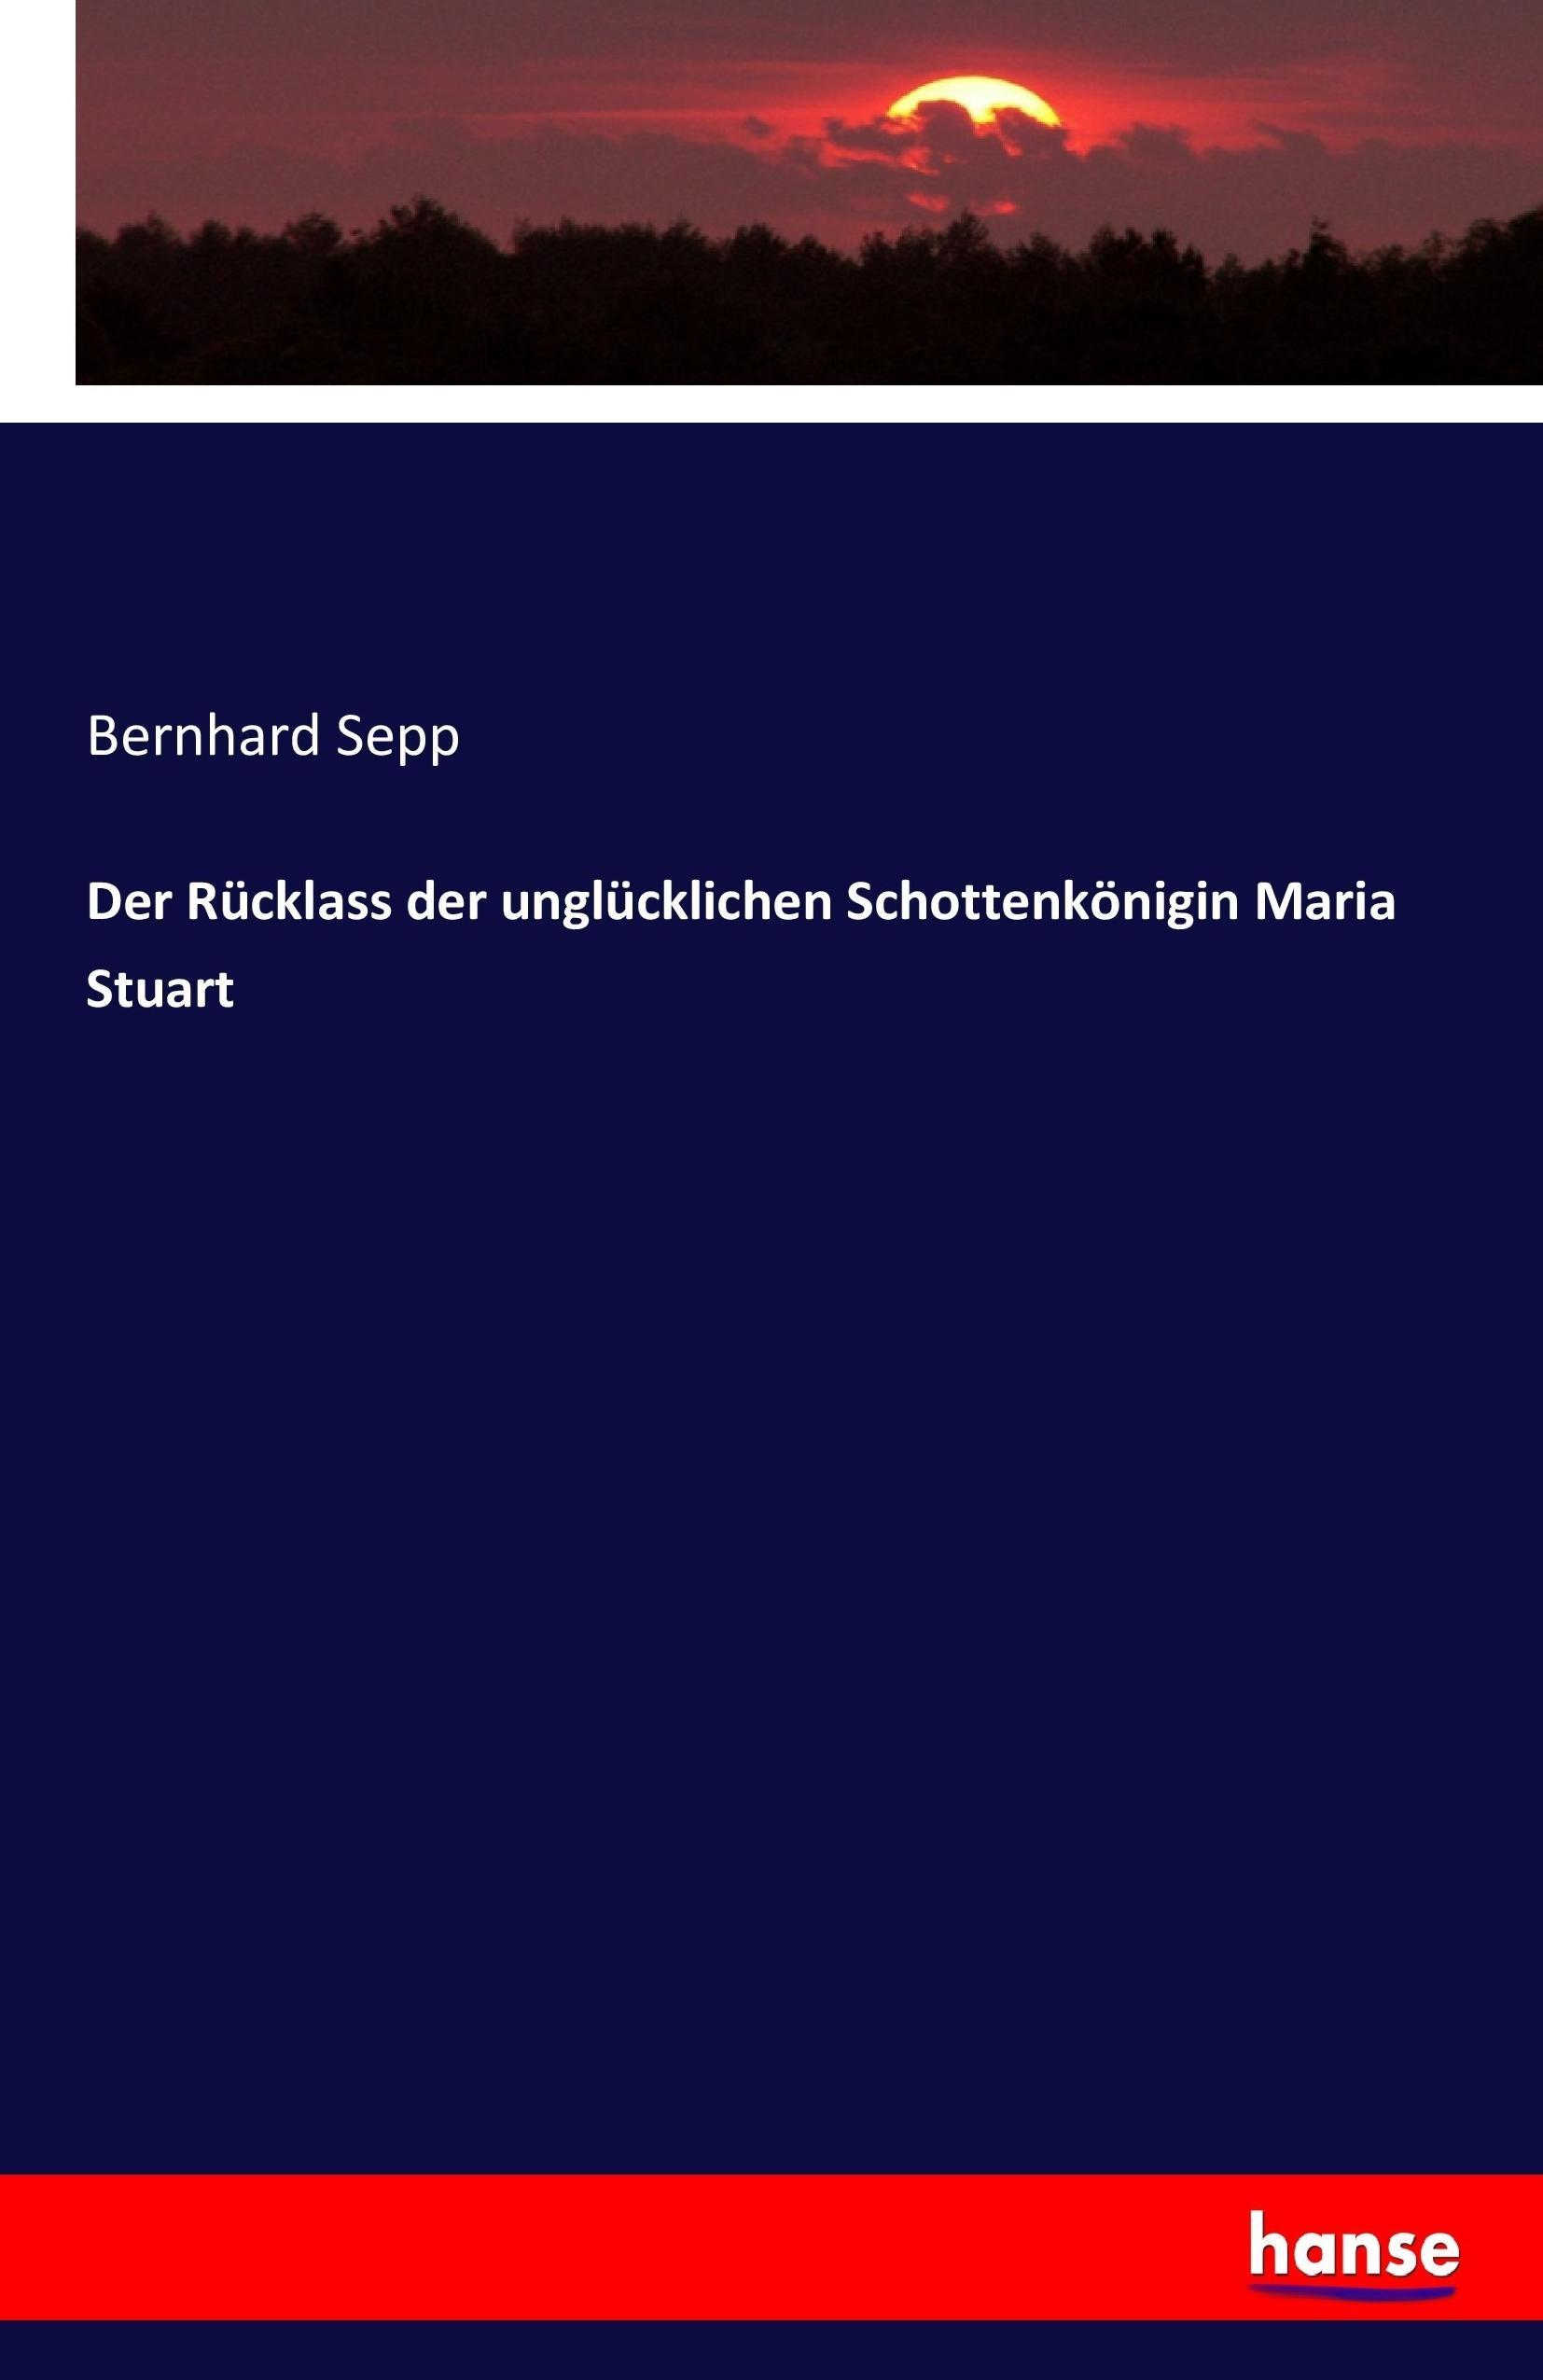 Der Rücklass der unglücklichen Schottenkönigin Maria Stuart | Bernhard Sepp | Taschenbuch | Paperback | 128 S. | Deutsch | 2017 | hansebooks | EAN 9783743625310 - Sepp, Bernhard